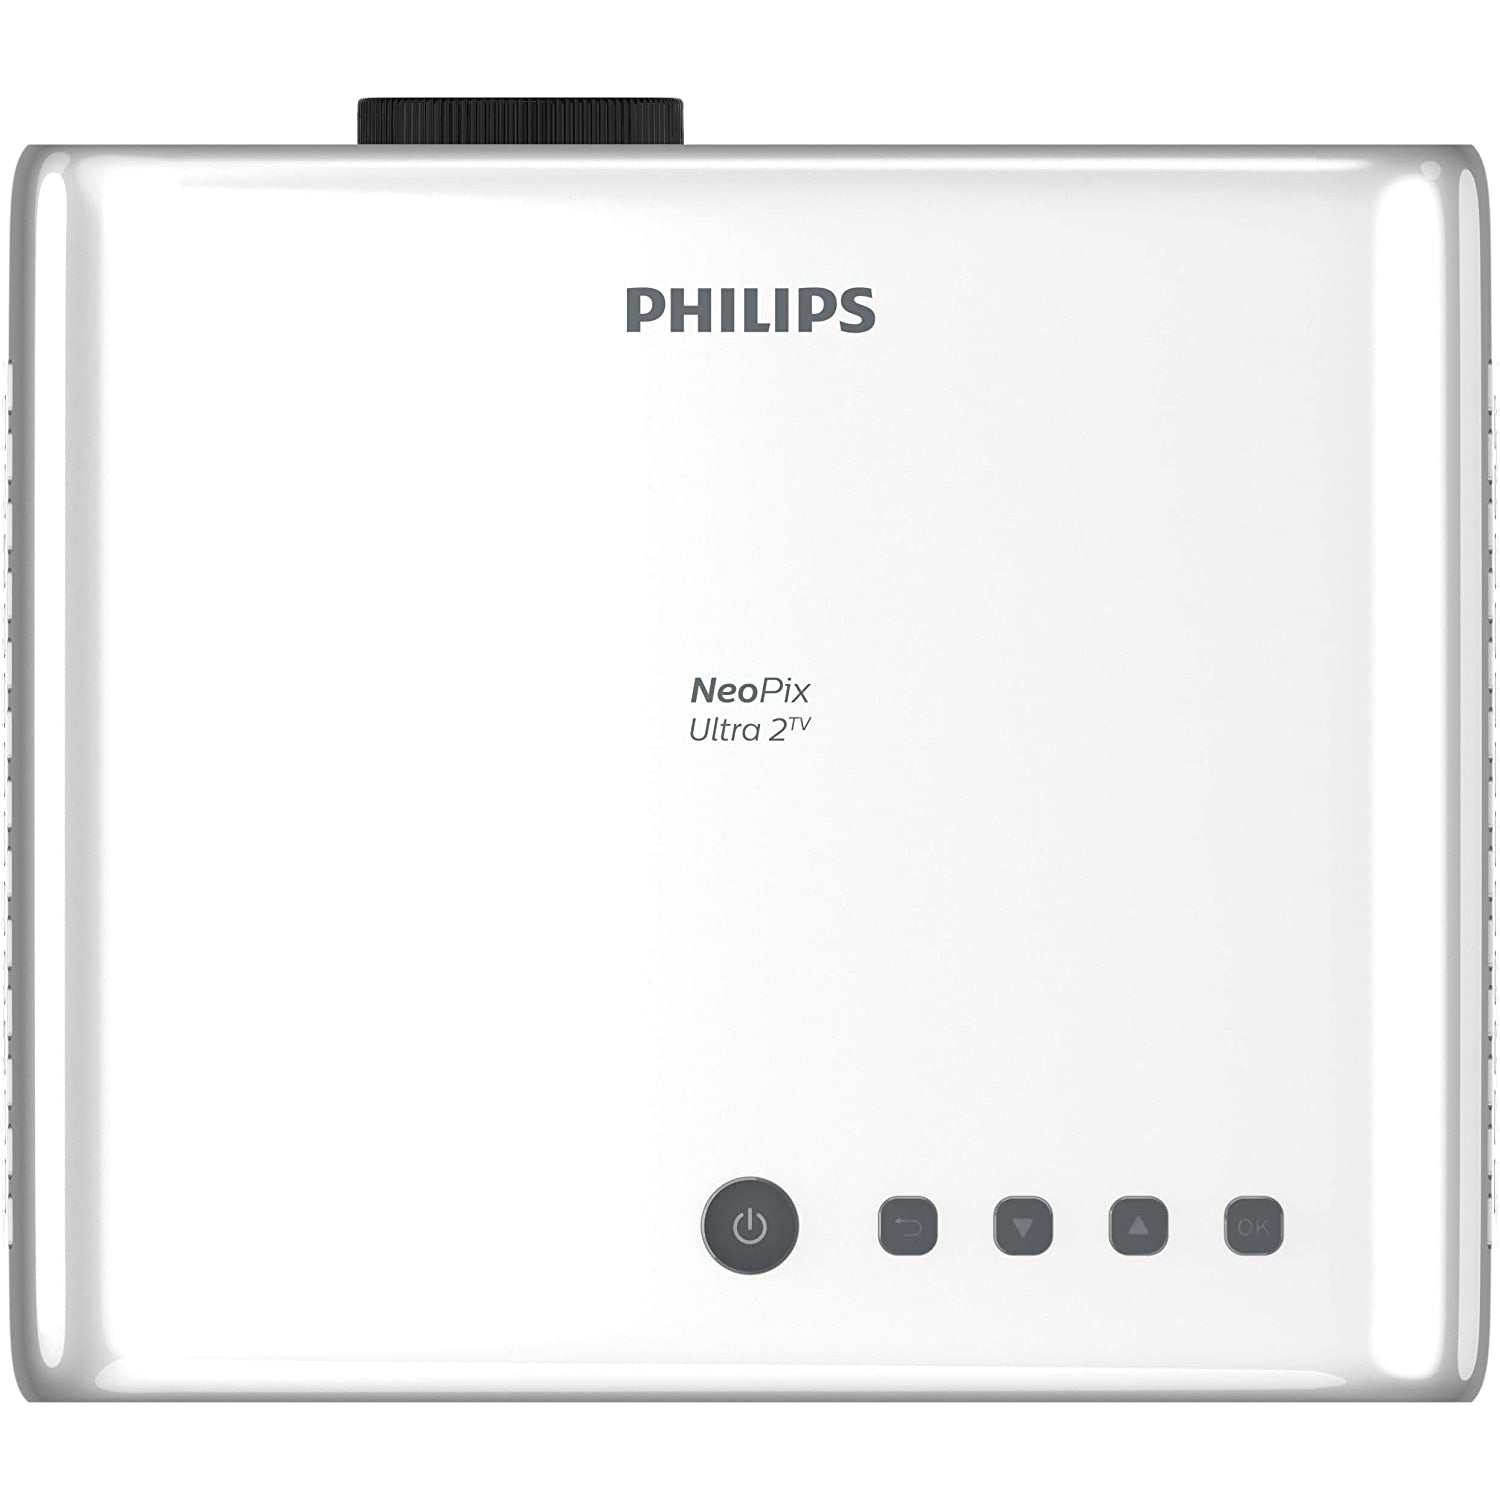 Philips NeoPix Ultra 2TV NPX643 Smart Full HD Home Cinema Projector - Refurbished Good